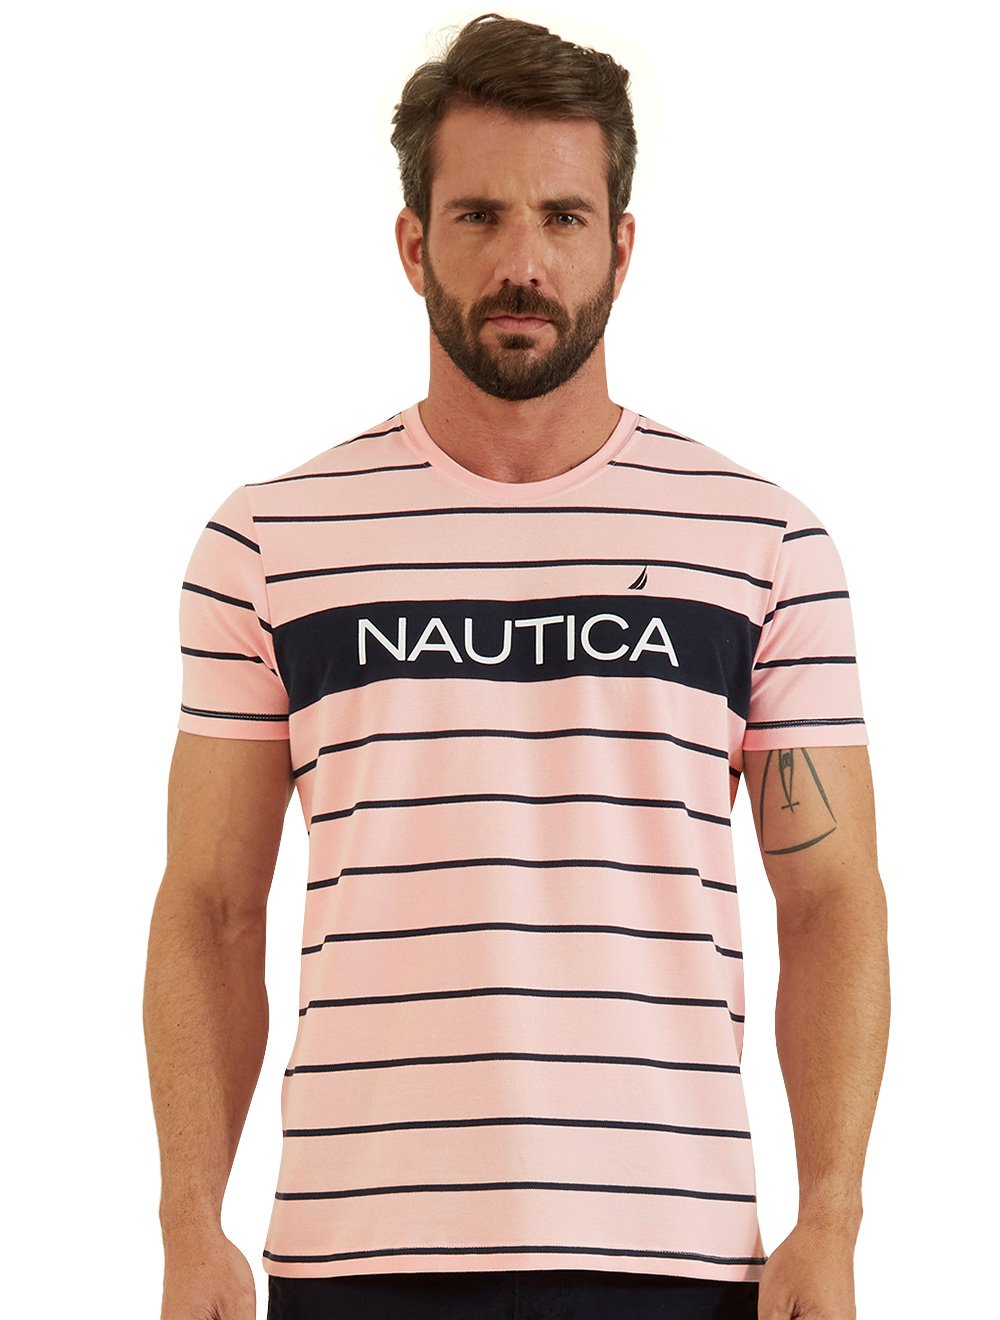 Camiseta Nautica Masculina Piquet Navy Stripes Patch Rosa